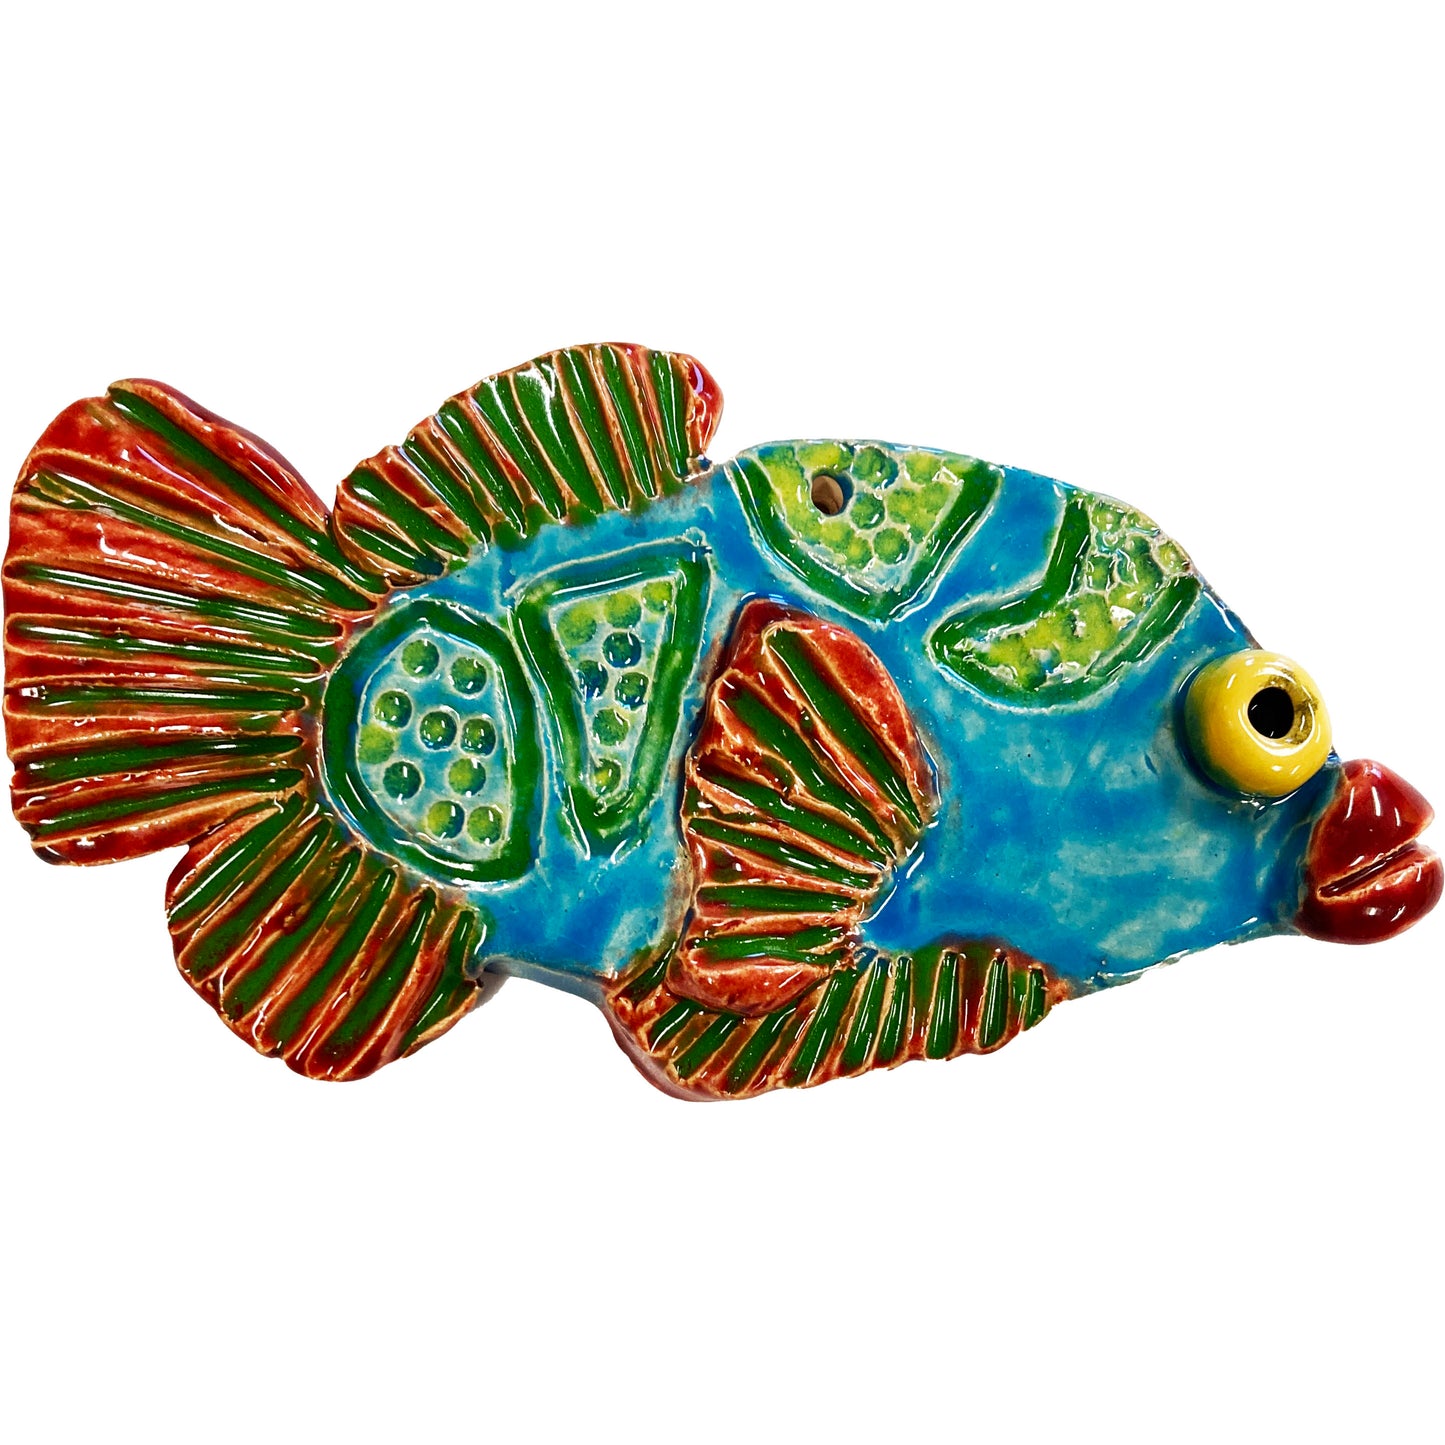 Ceramic Arts Handmade Clay Crafts Fresh Fish 6-inch x 3.5-inch Glazed by Zack Kipper